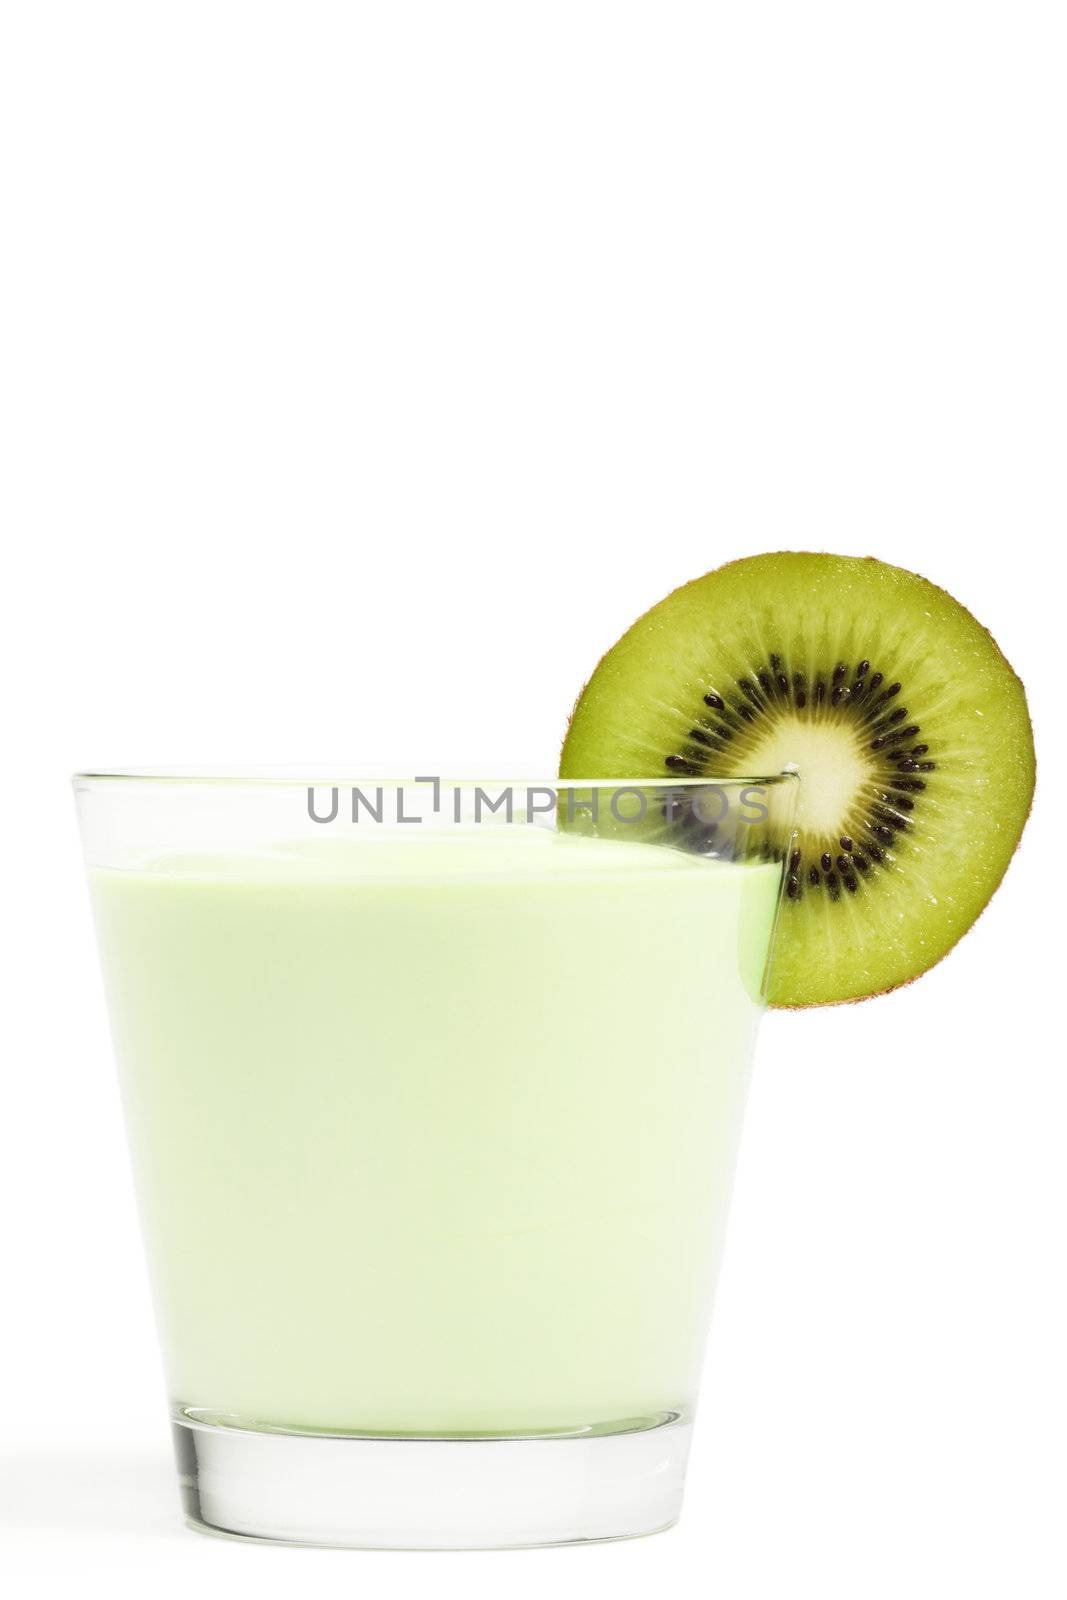 kiwi milkshake with a blade of a kiwifruit on white background